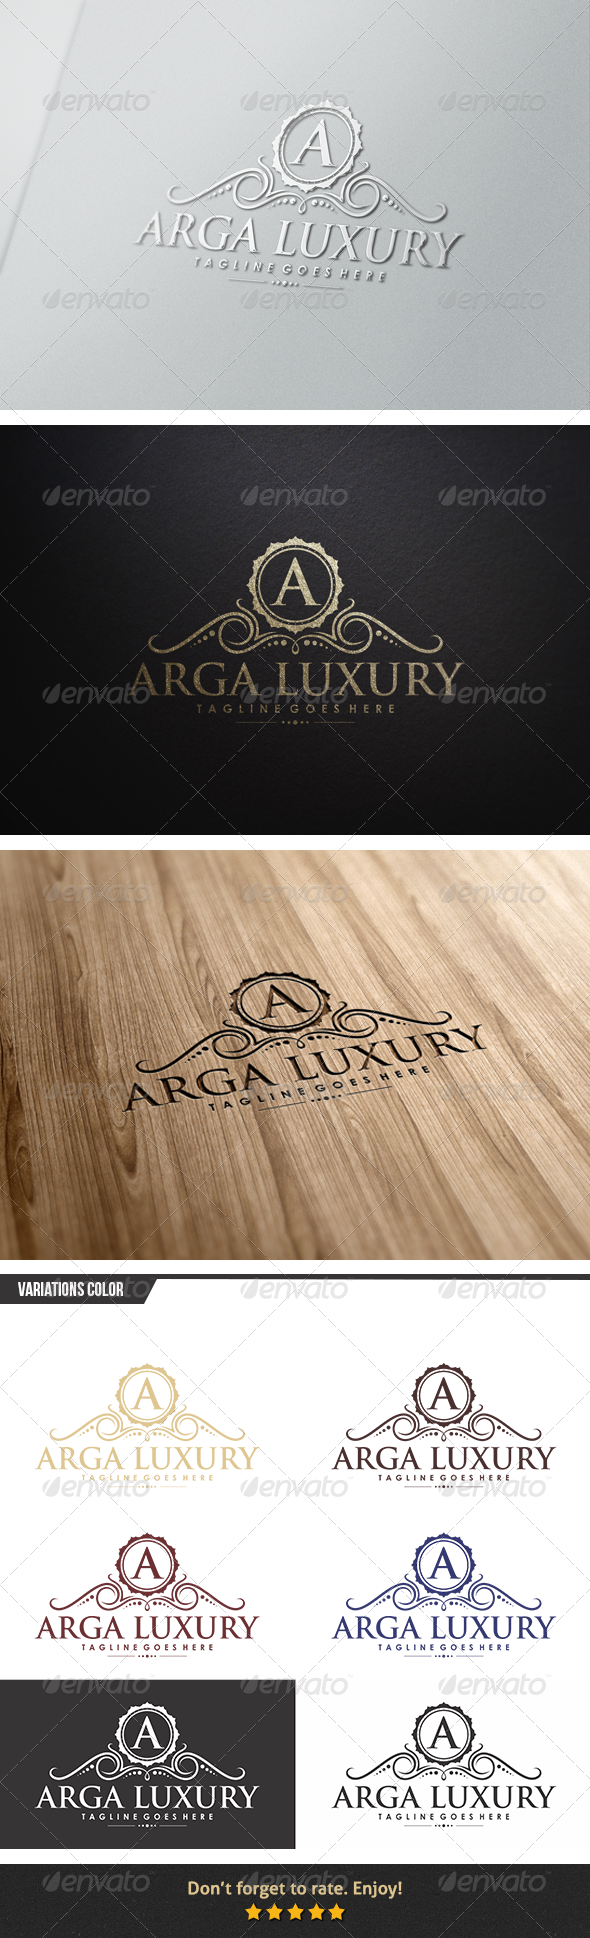 Arga Luxury Logo